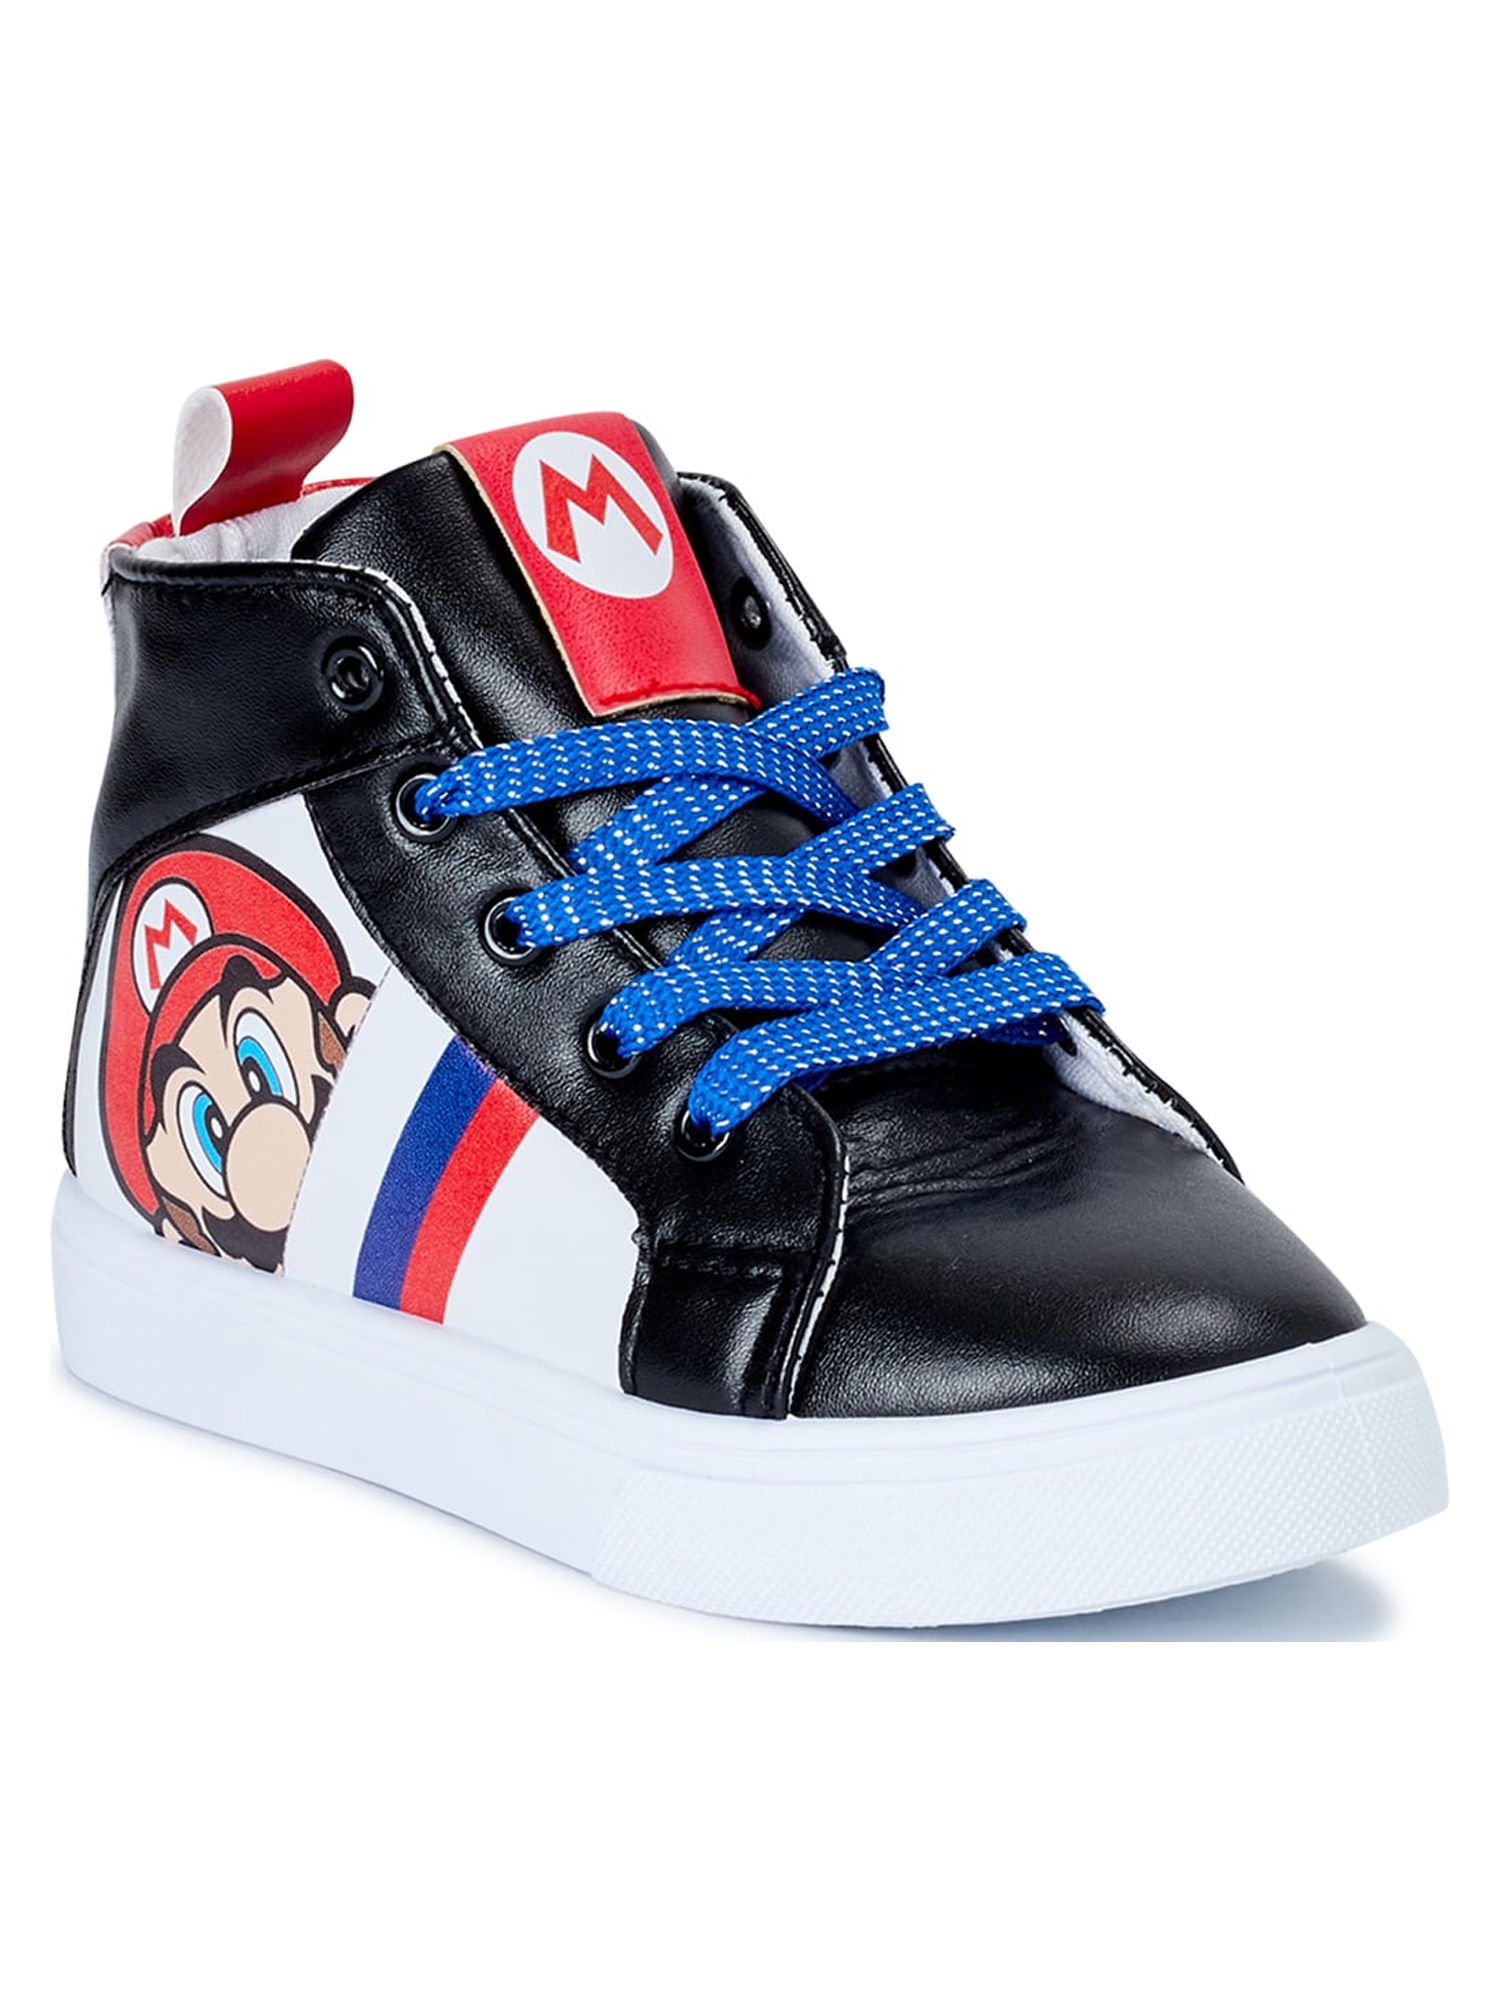 Mario Boys High Top Sneakers - image 1 of 6